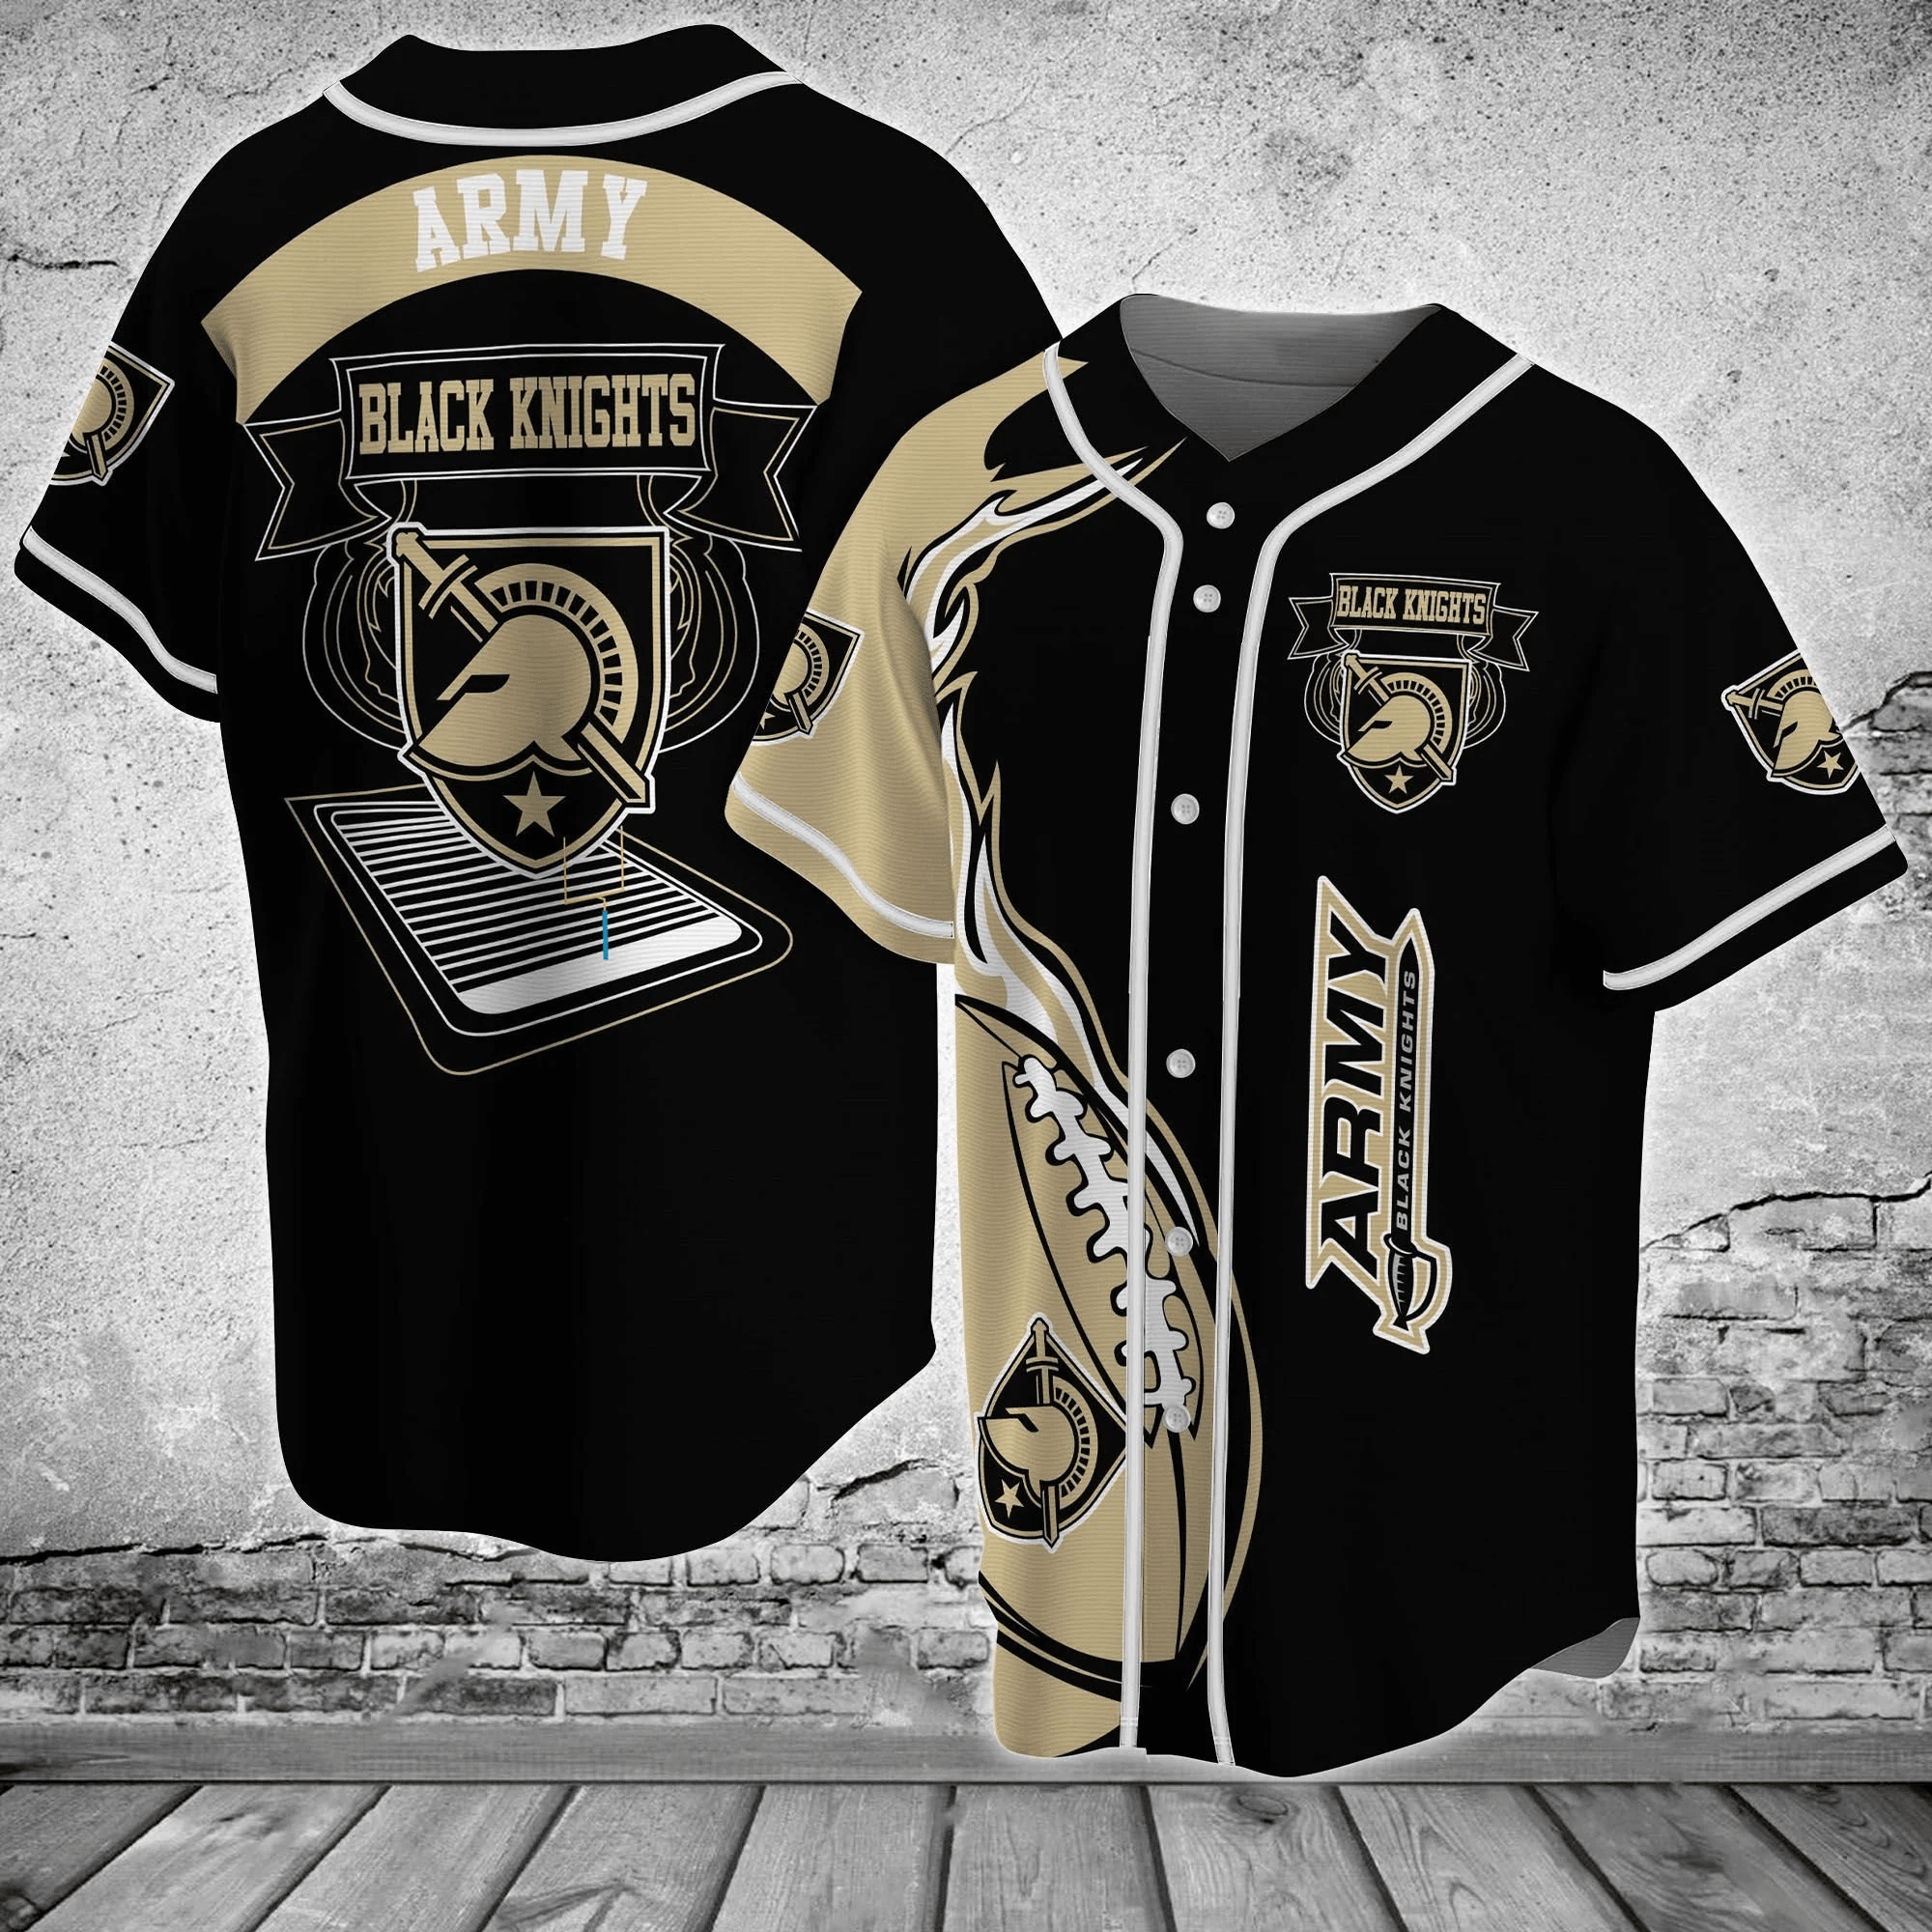 Army Black Knights NCAA Baseball Jersey Shirt Classic